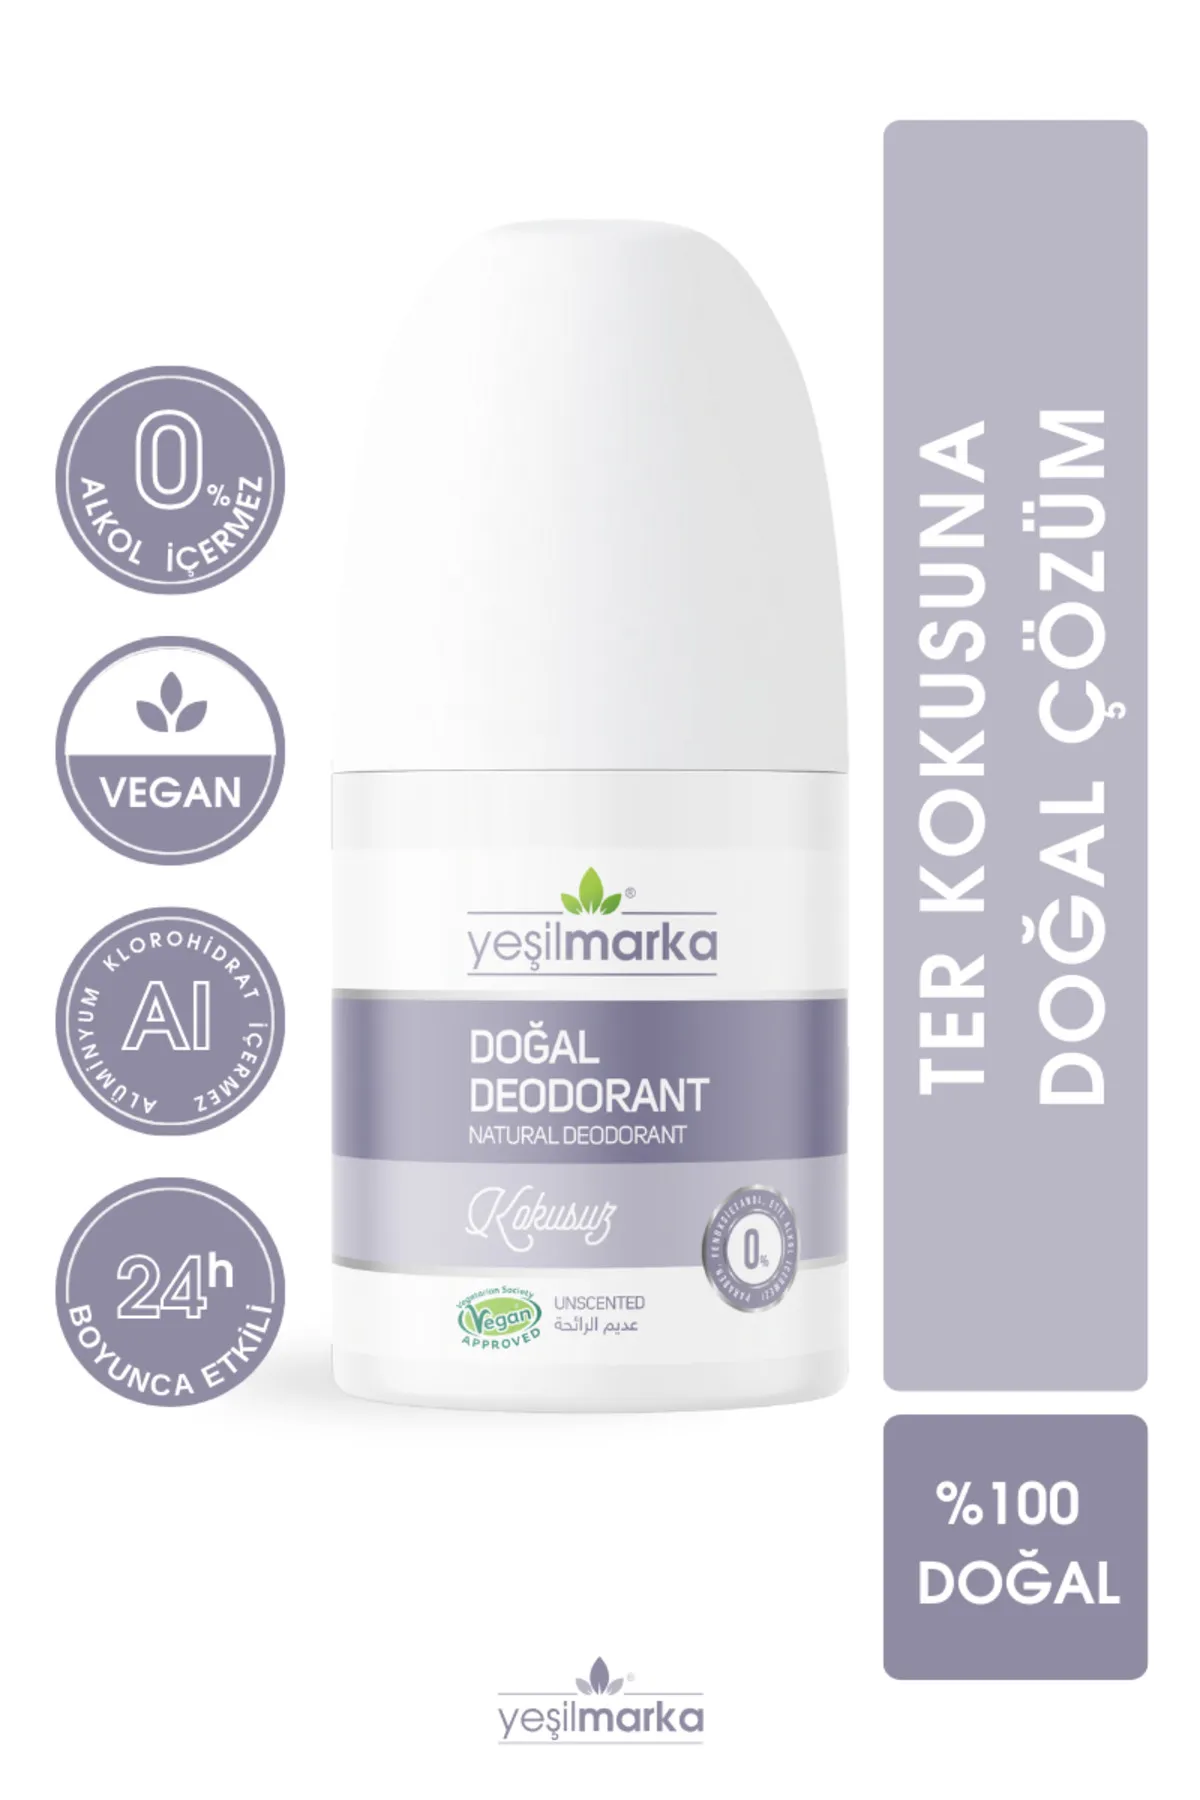 Yeşilmarka Doğal Deodorant - Kokusuz (50 ml)